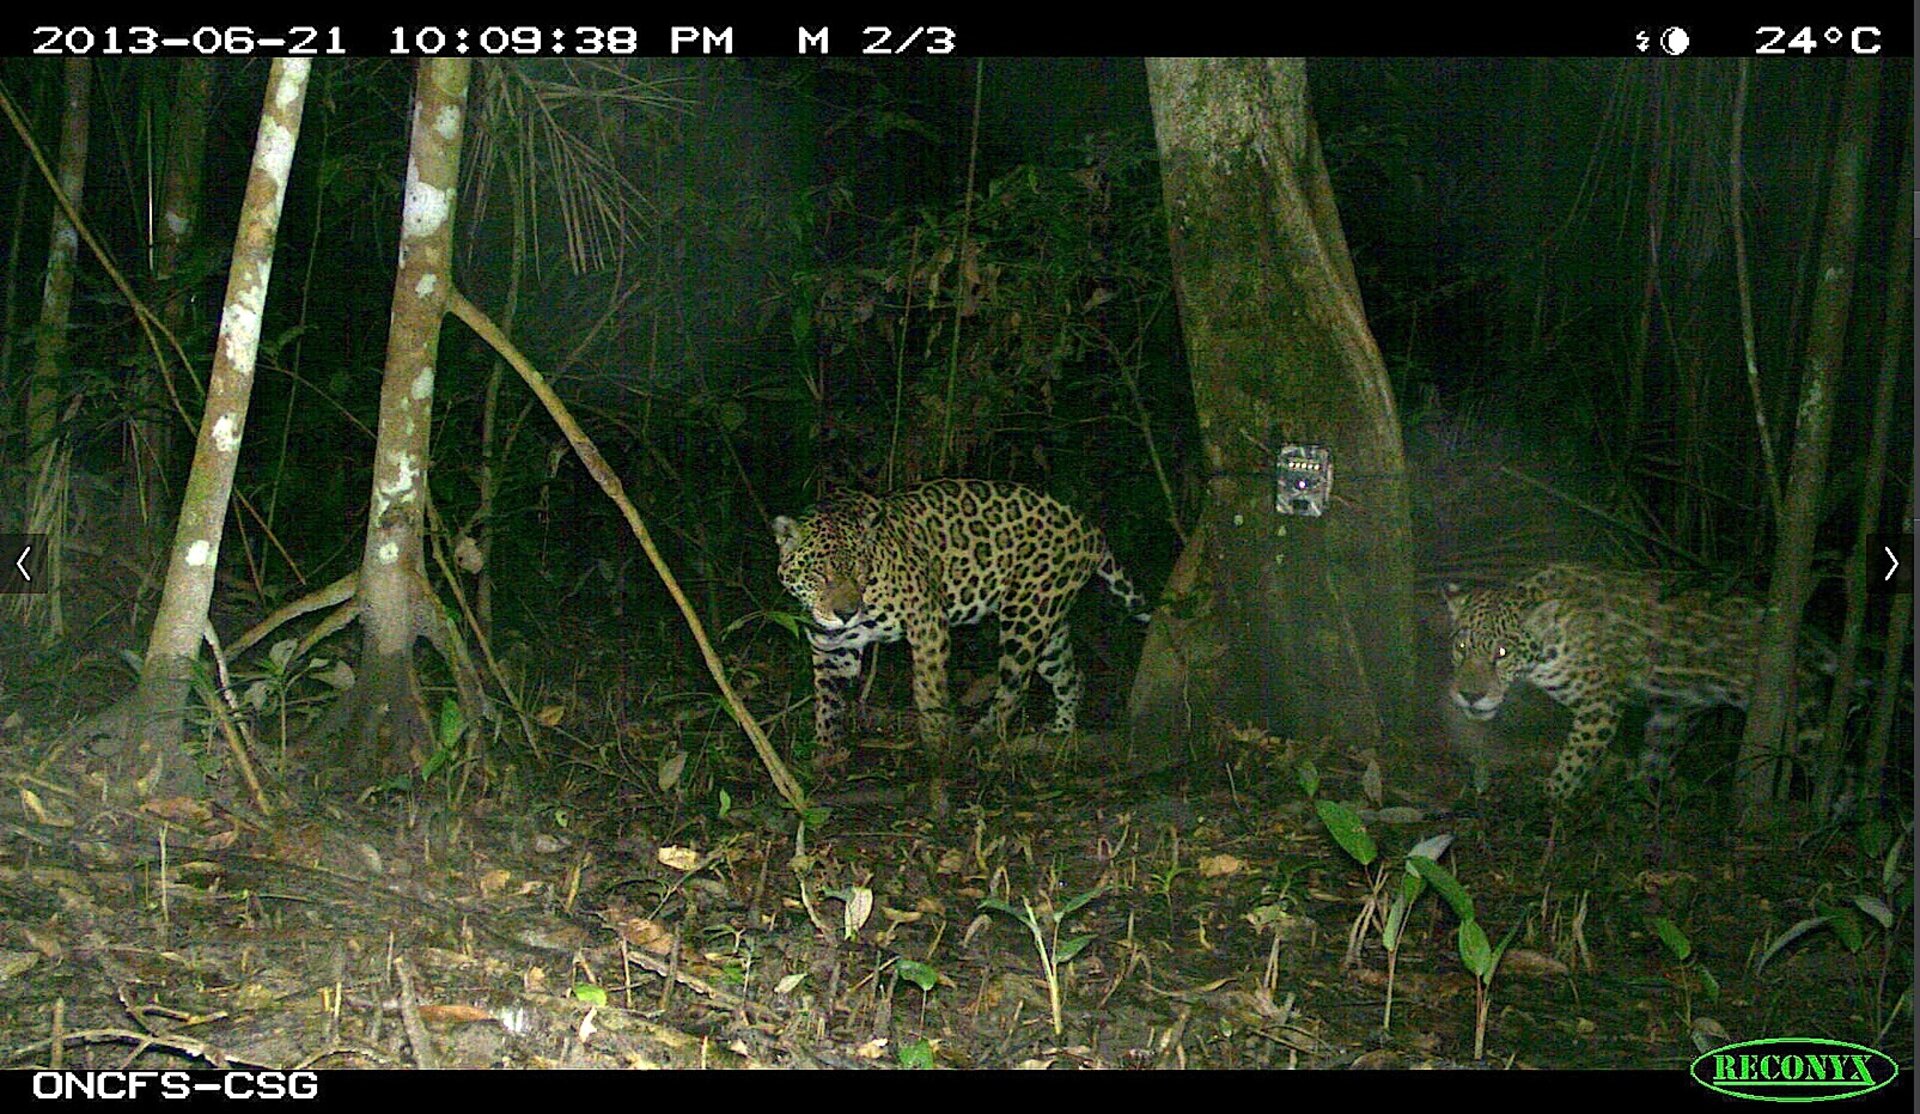 Jaguars trigger the cameras at CSG